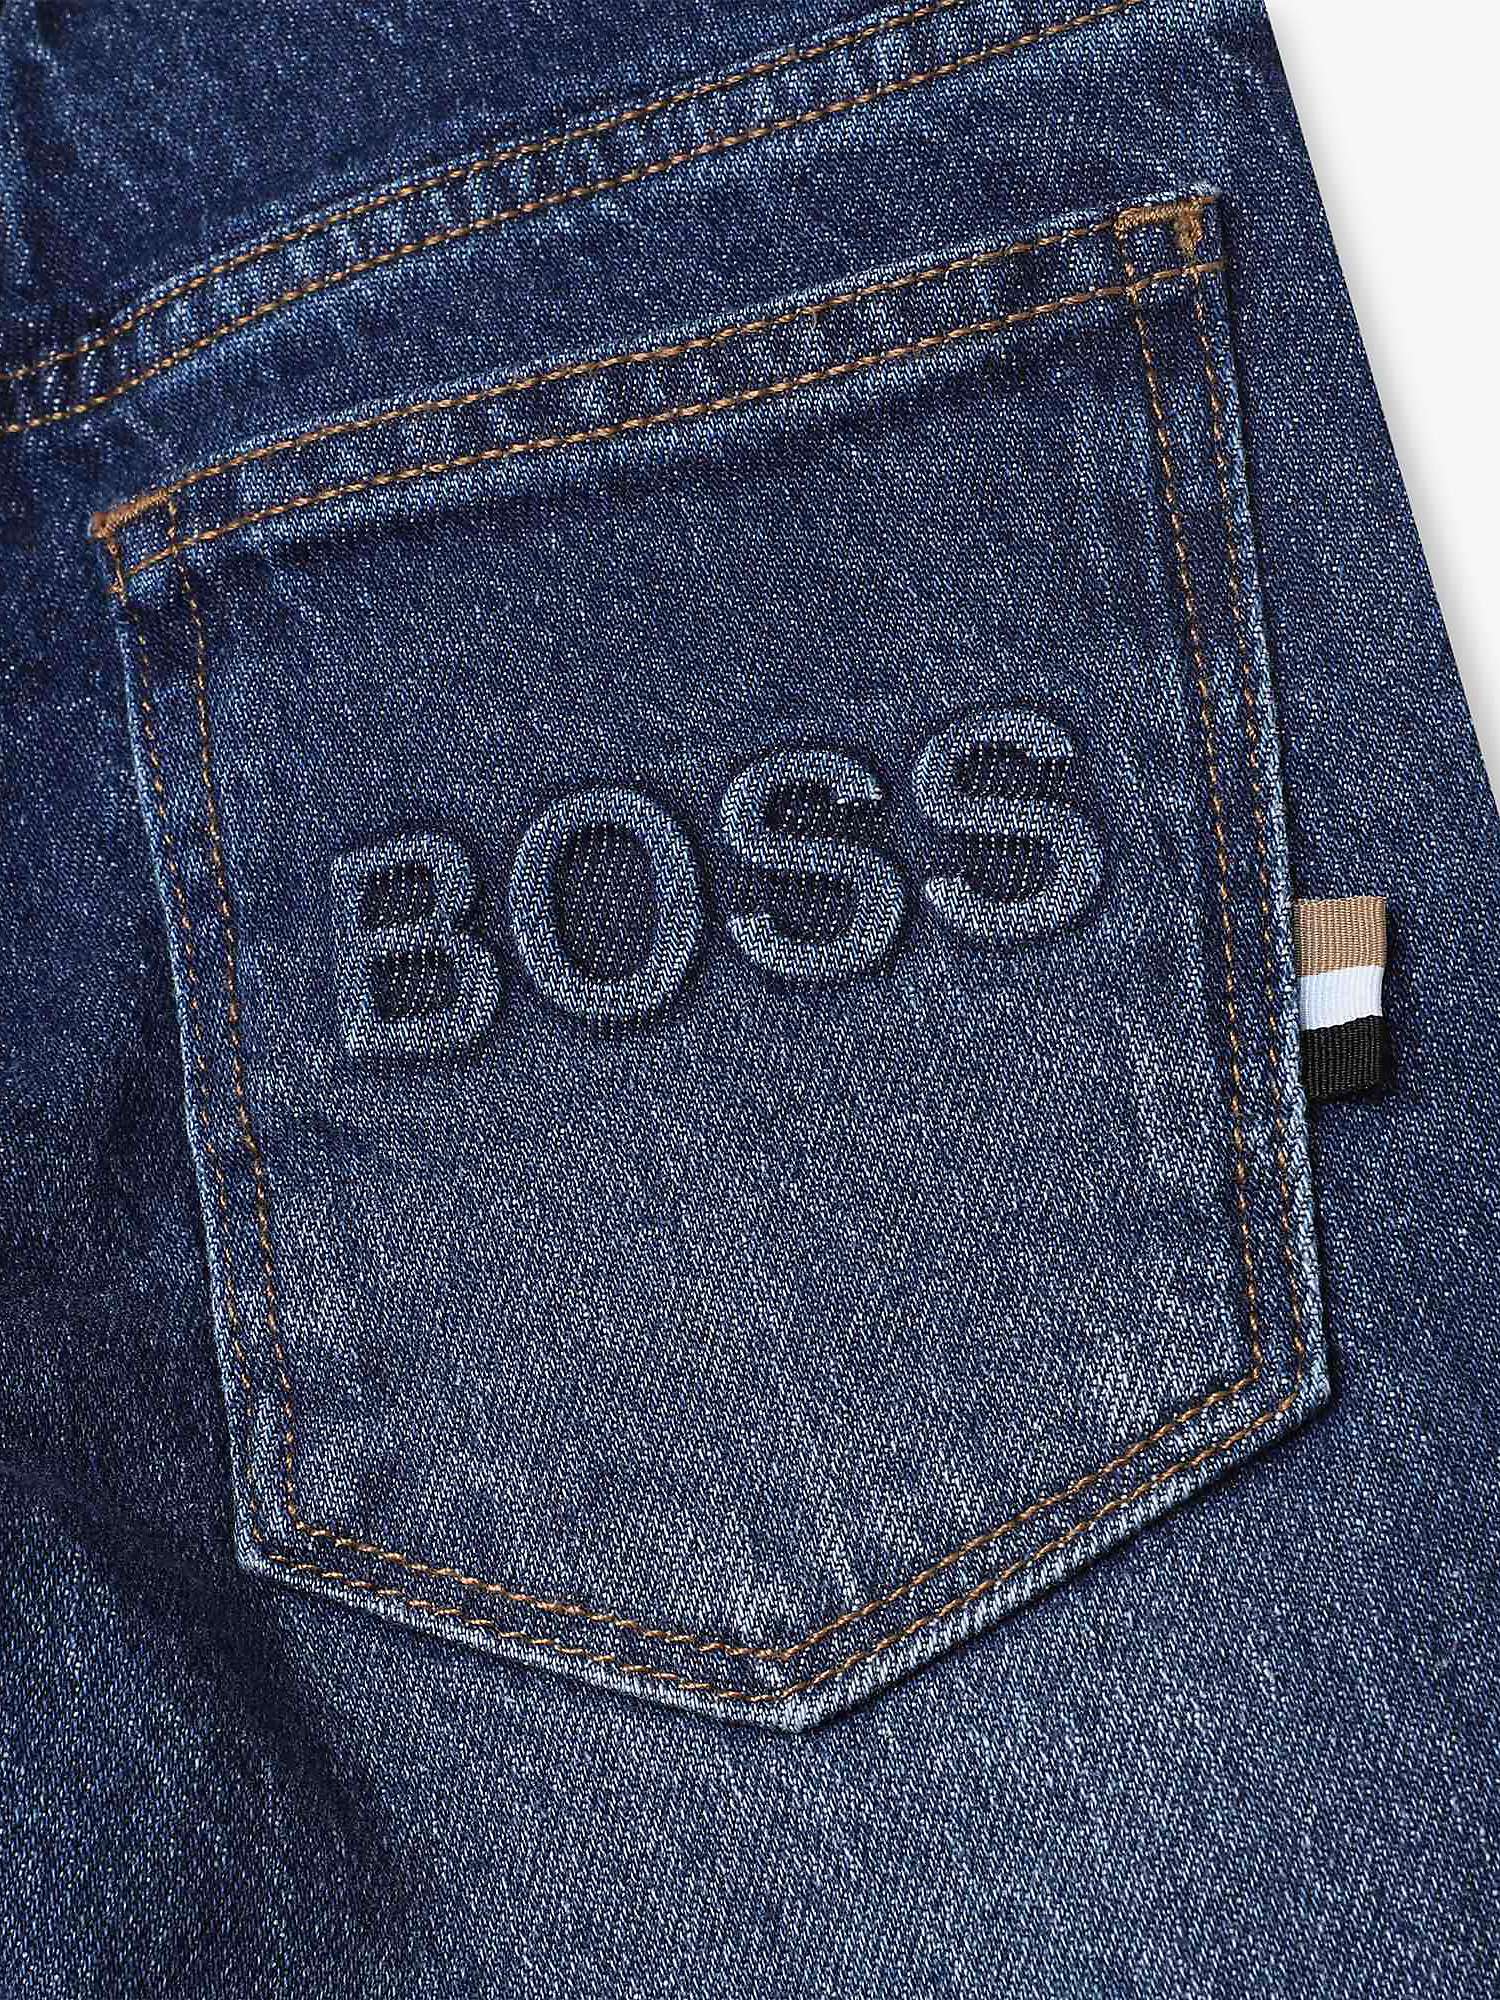 Buy BOSS Boy's Logo Embossed Pocket Jeans, Blue Online at johnlewis.com